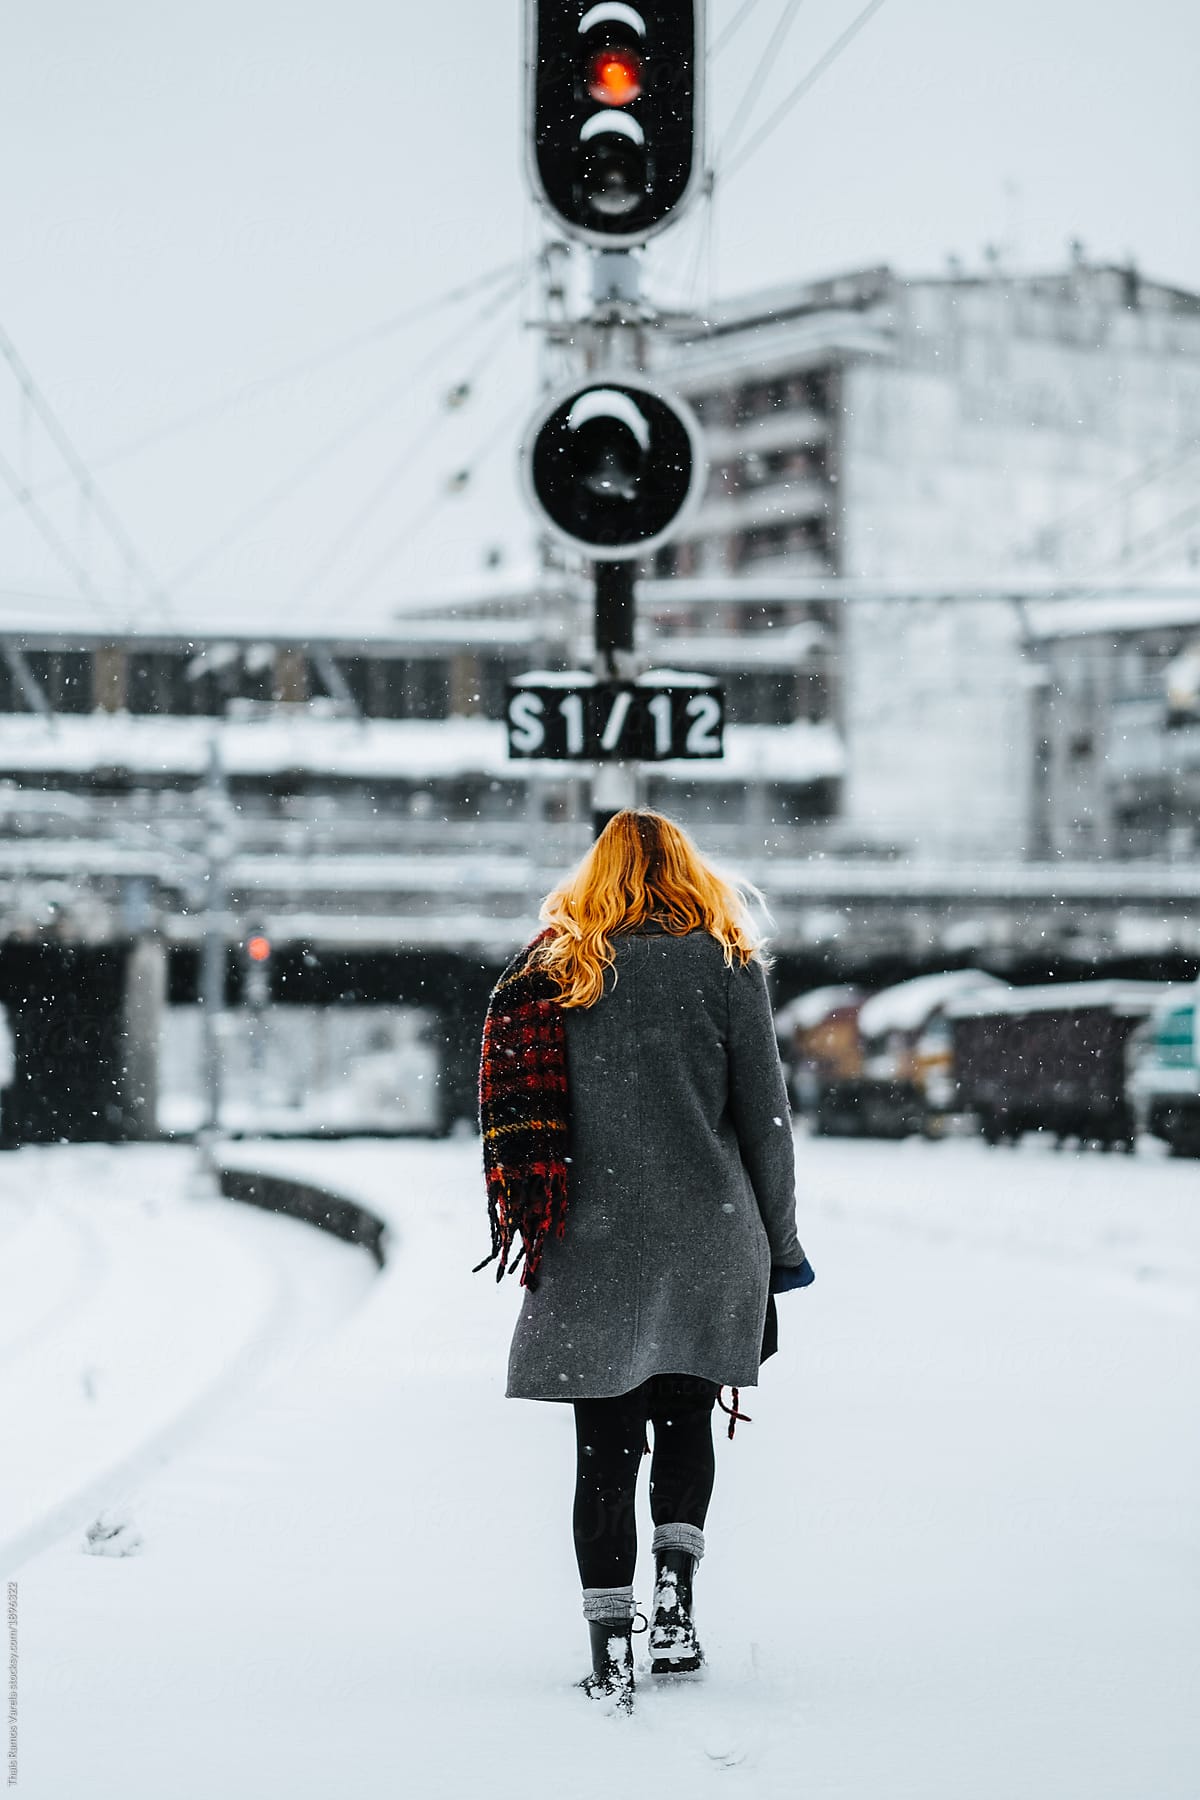 redhead woman walking on snowy train tracks